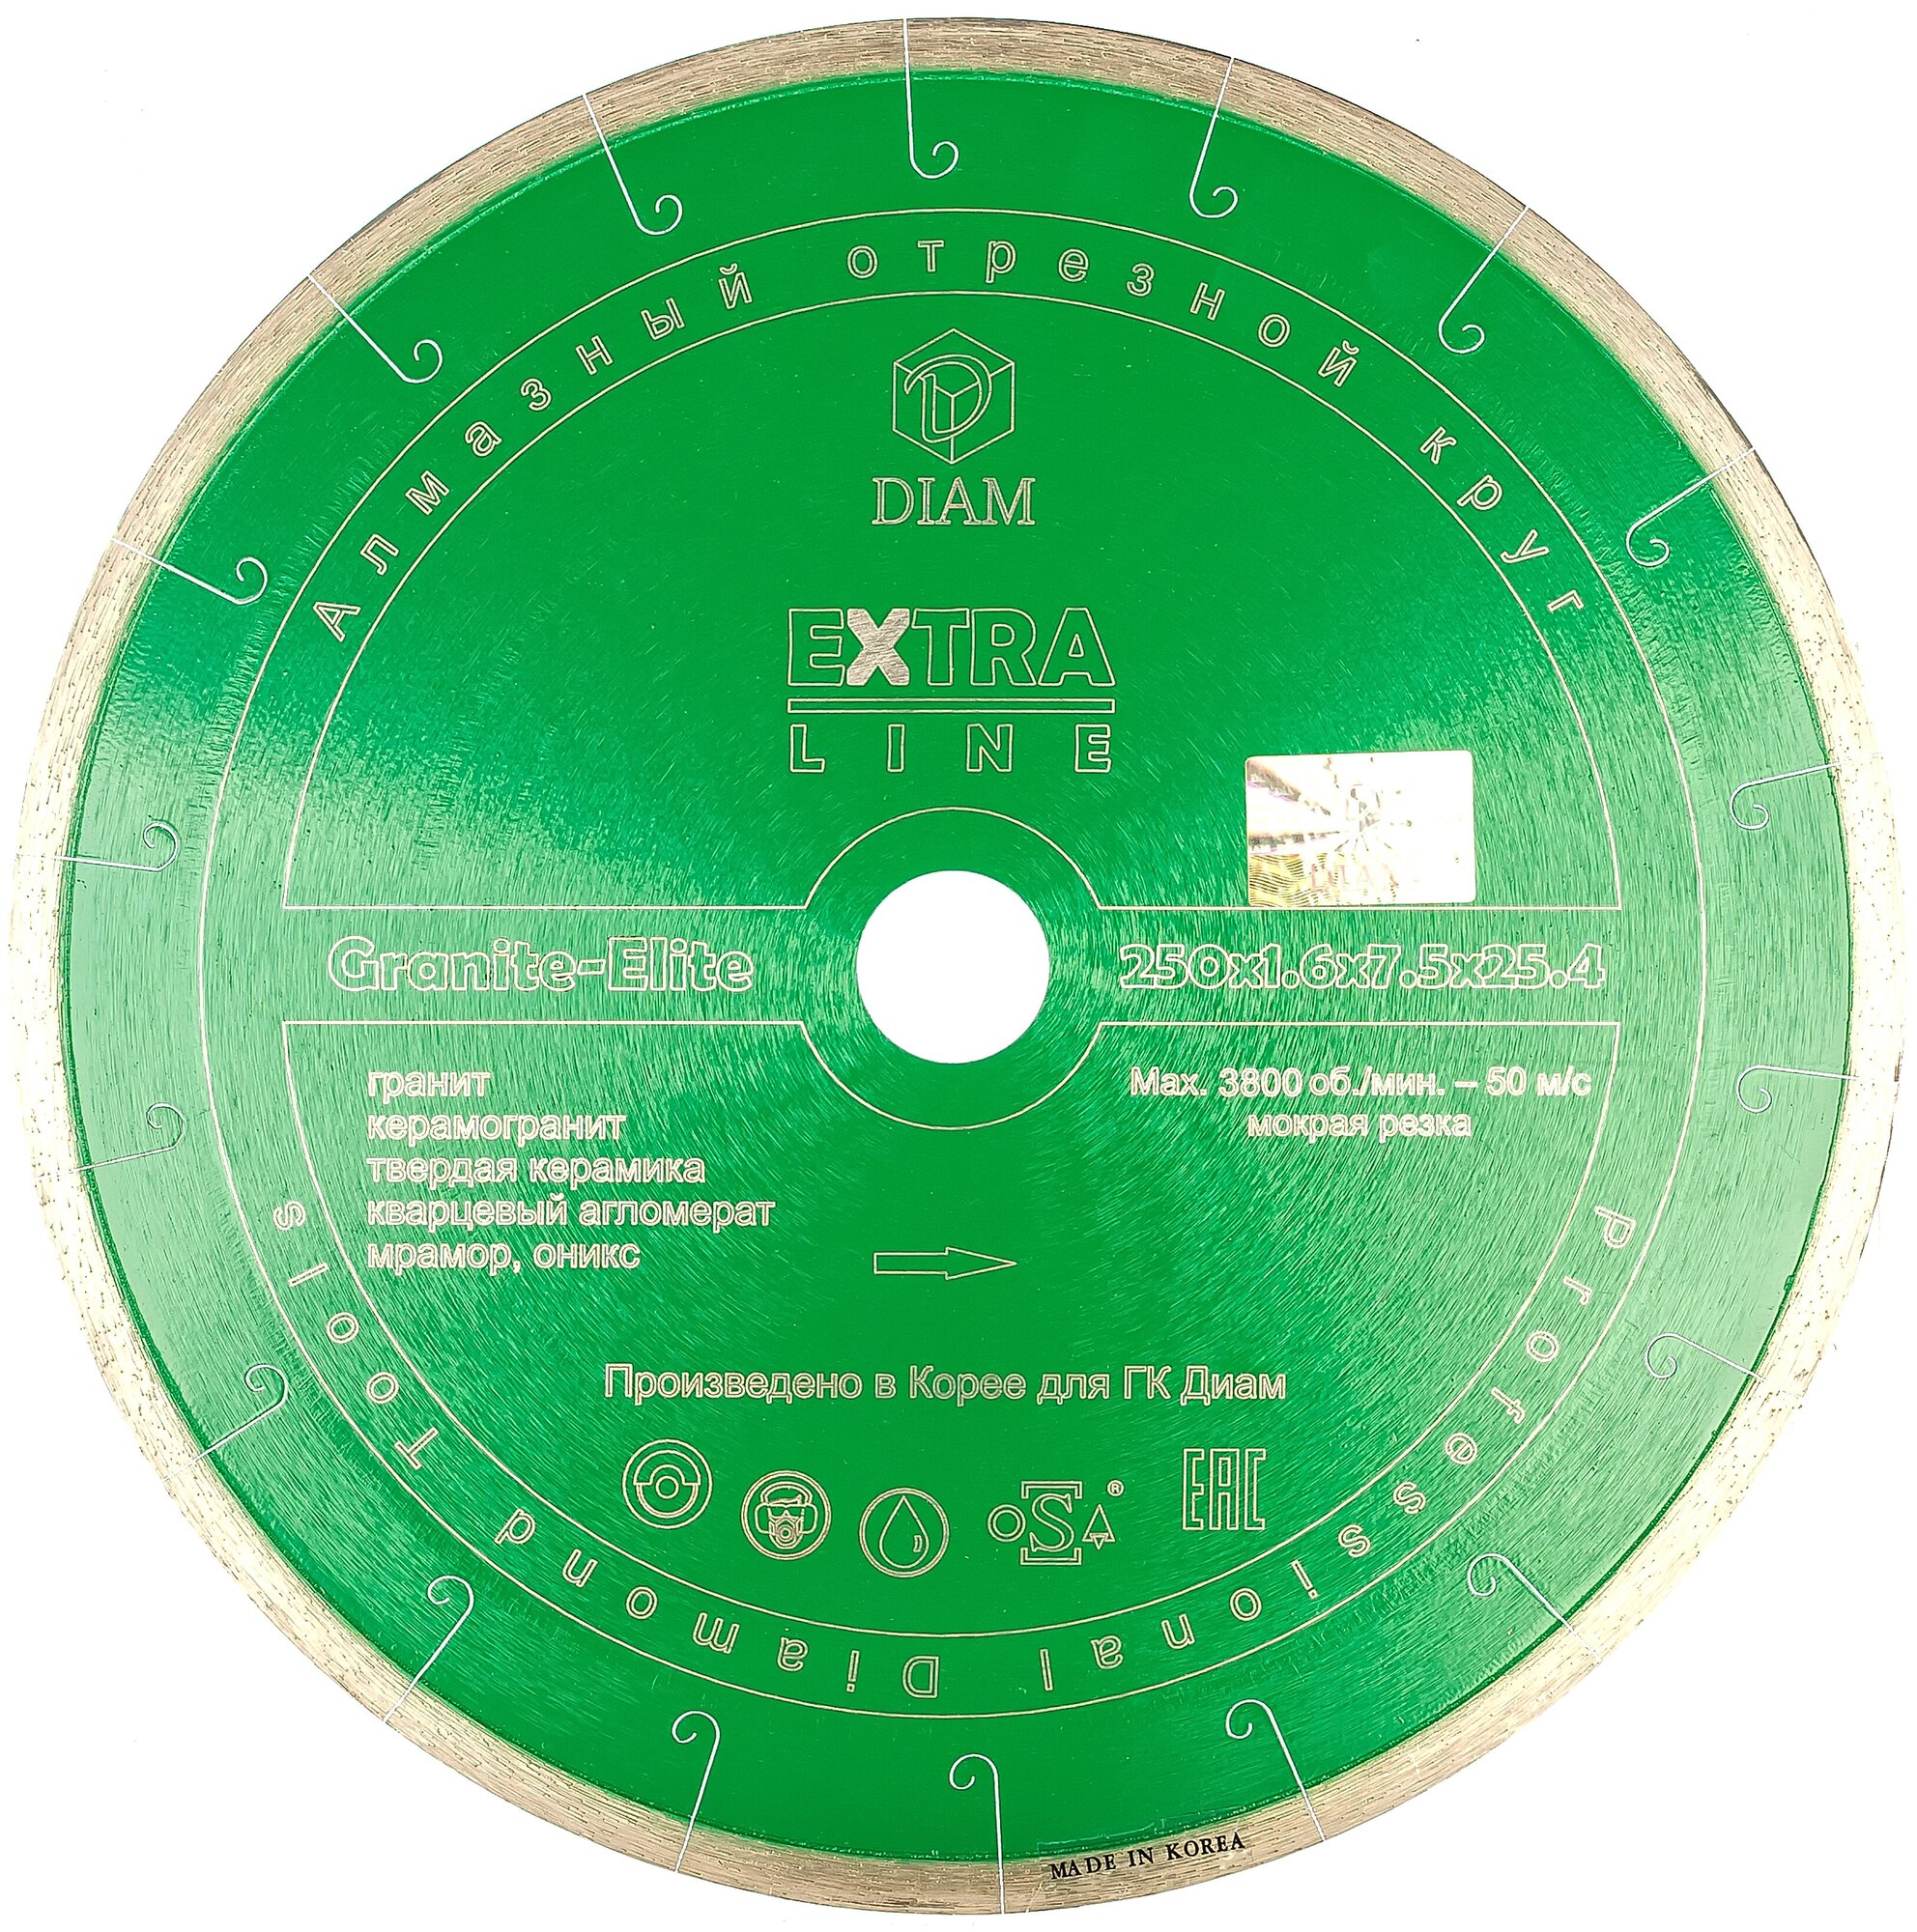 Diam Алмазный отрезной диск для мокрой резки Granite-Elite 250x1,6x7,5x25,4 000202